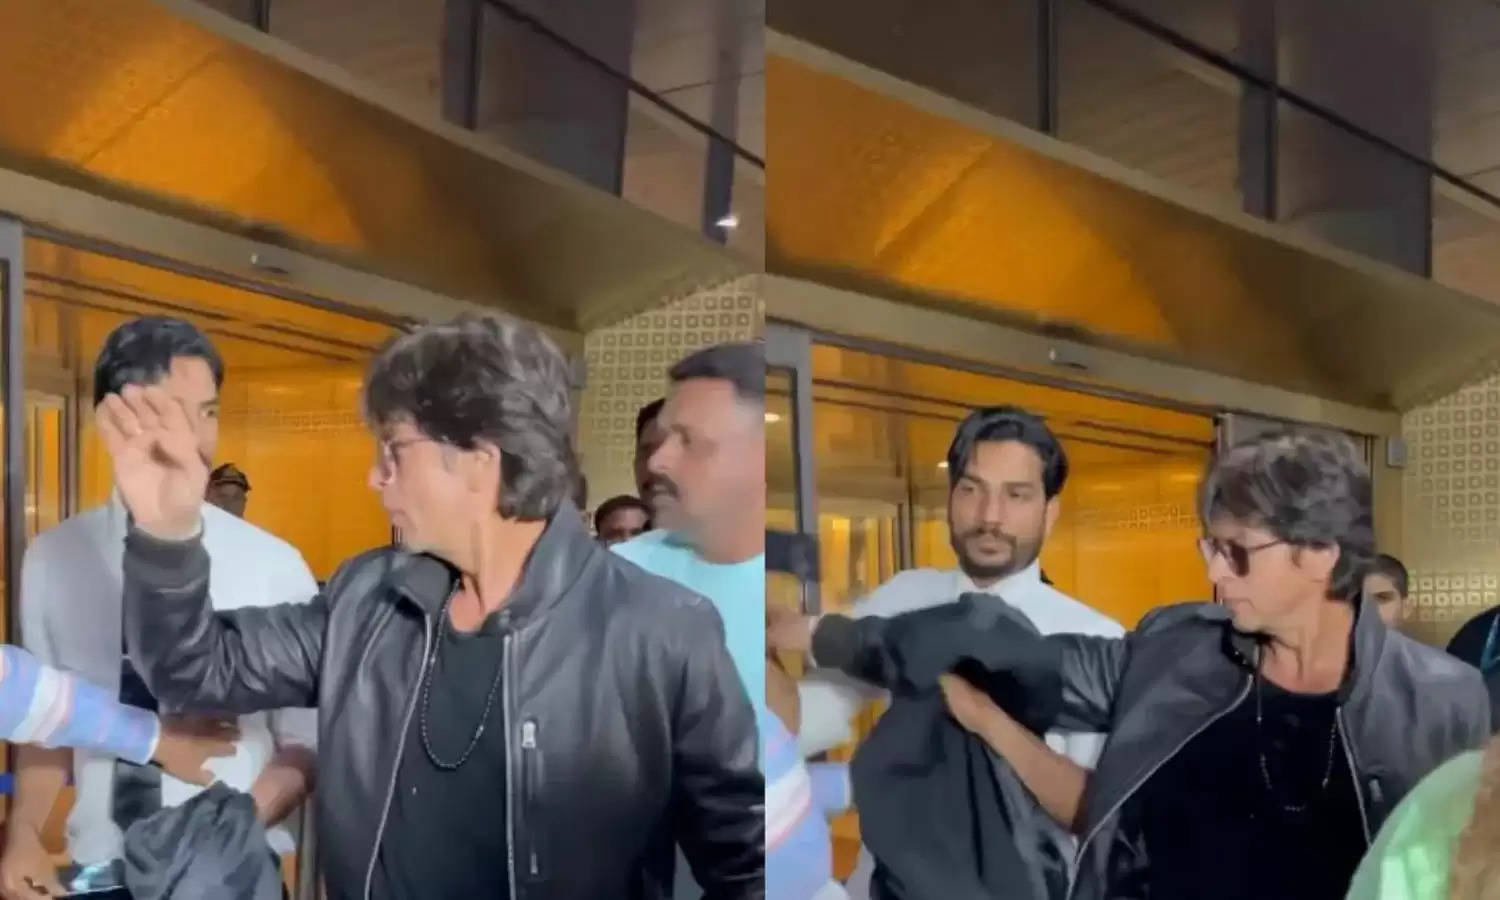 सलमान खान के बाद अब शाहरुख खान ने मुंबई एयरपोर्ट पर सेल्फी ले रहे फैन को दिया धक्का